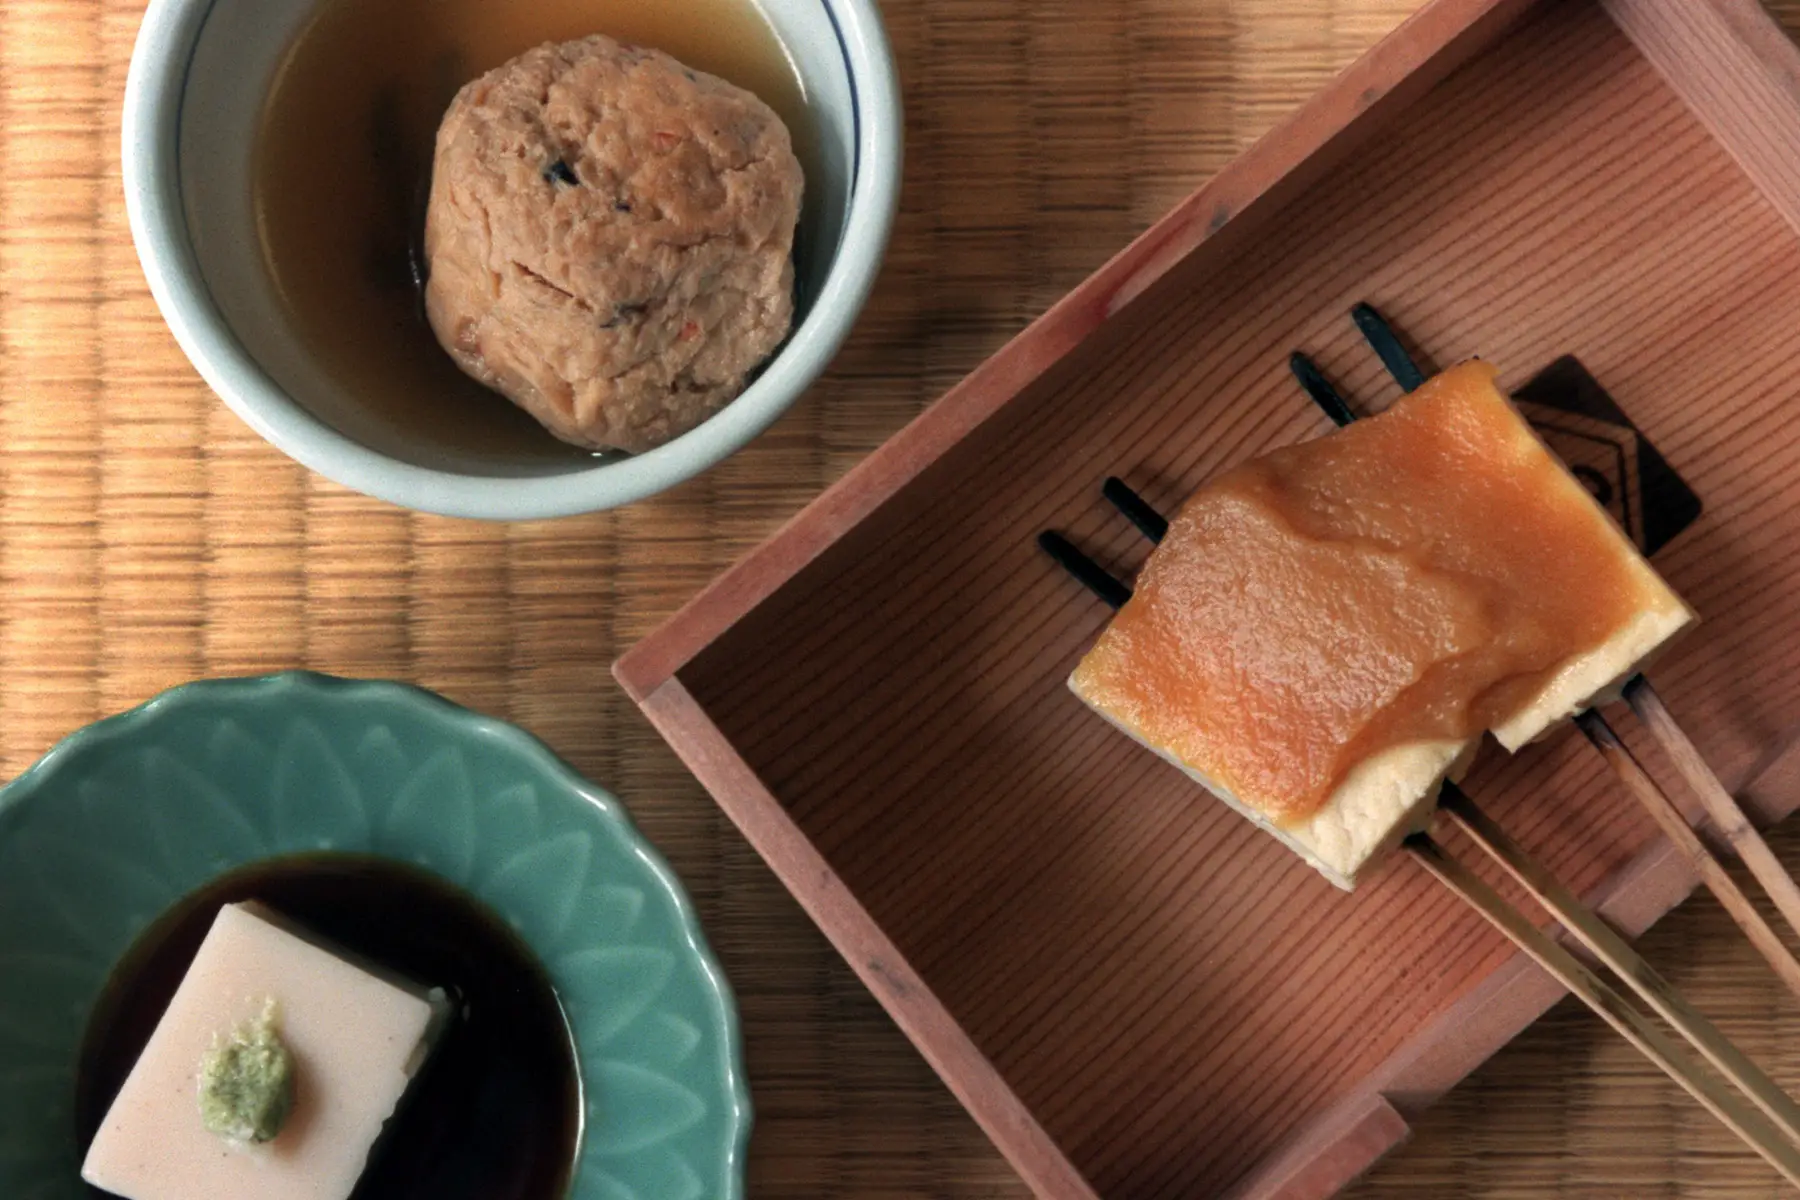 Toshikoshi Soba (New Year's Eve Soba) 年越しそば - Okonomi Kitchen